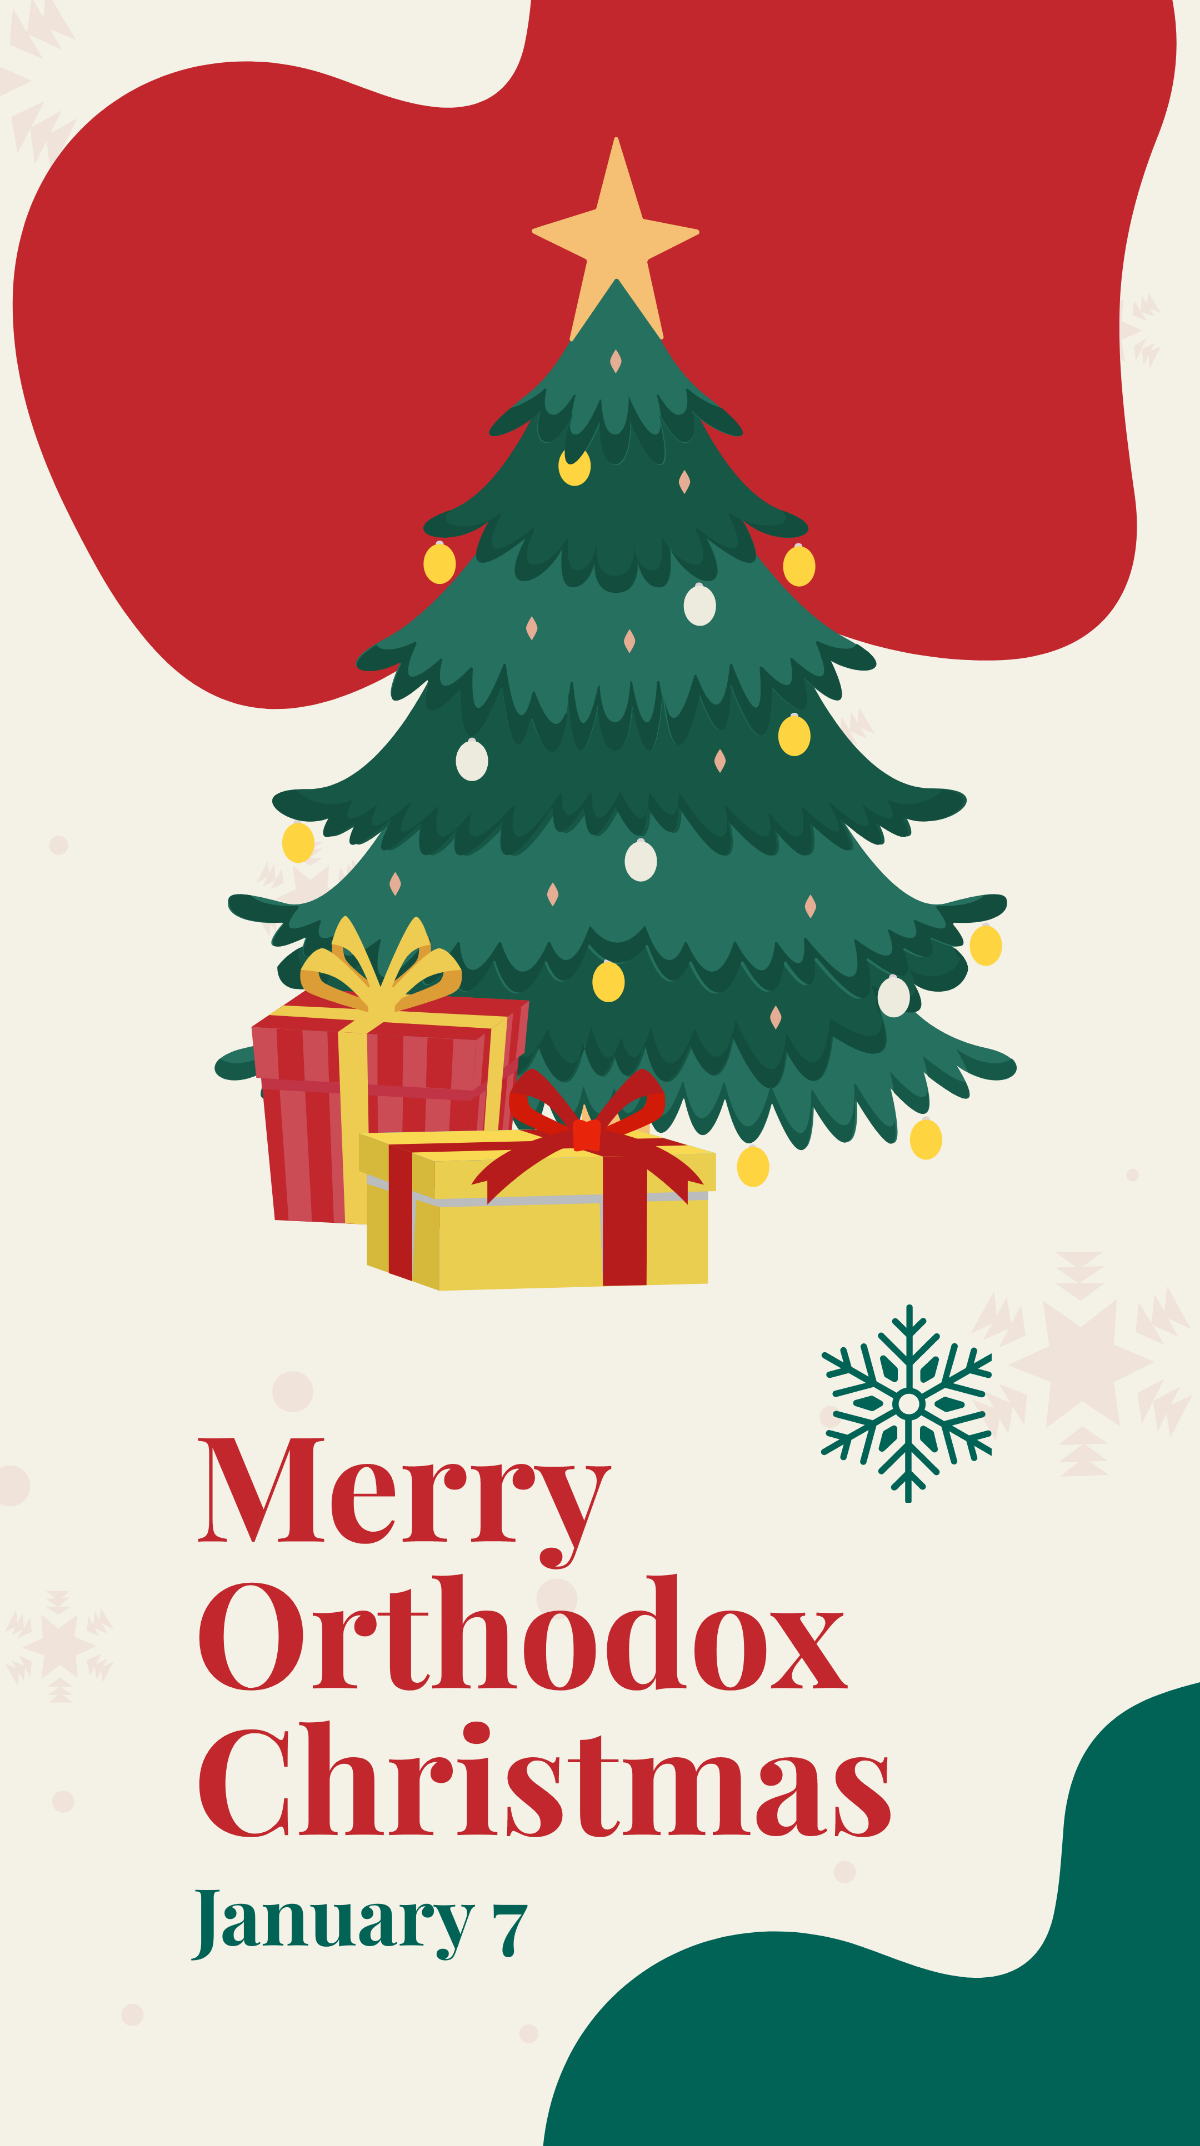 Merry Orthodox Christmas Whatsapp Post Template